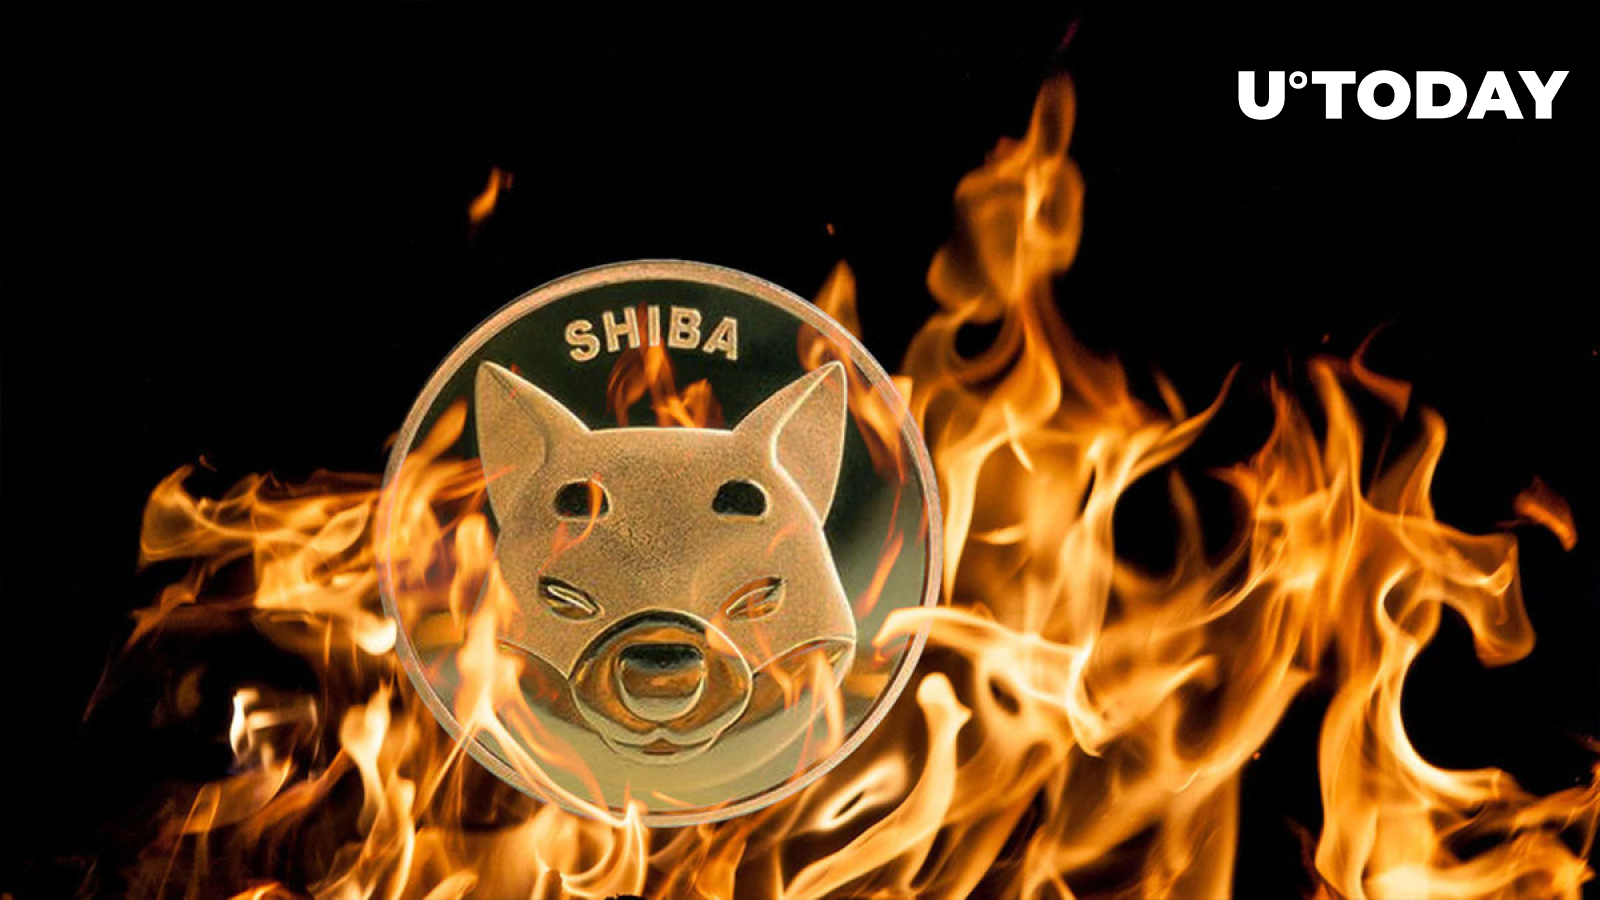 4-billion-shib-burned-in-week-millions-more-shiba-inu-tokens-burned-within-24-hours